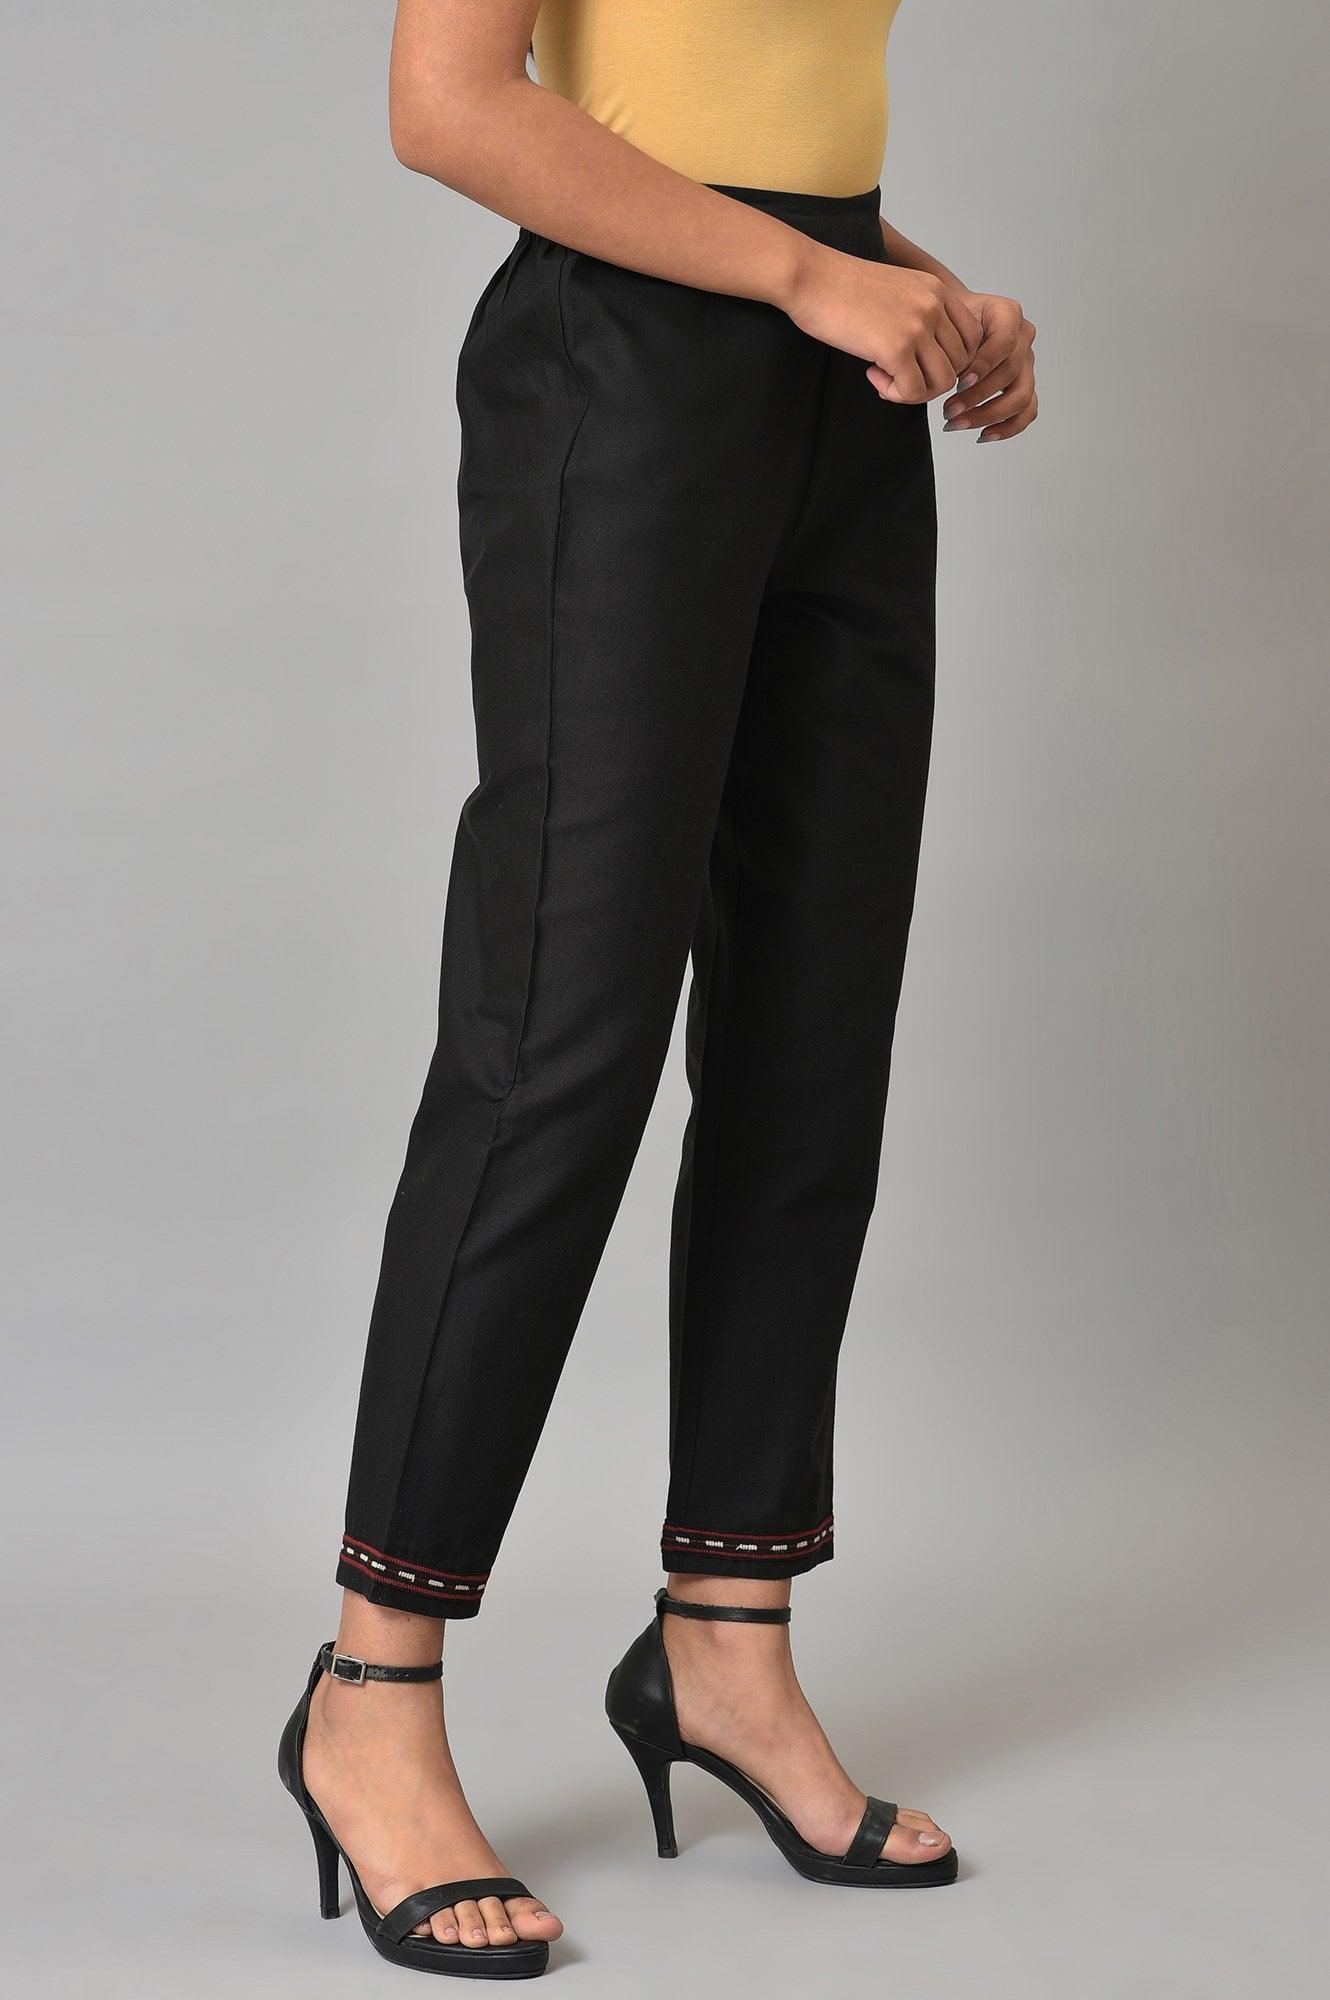 Black Slim Pants With Embroidery At Hemline - wforwoman